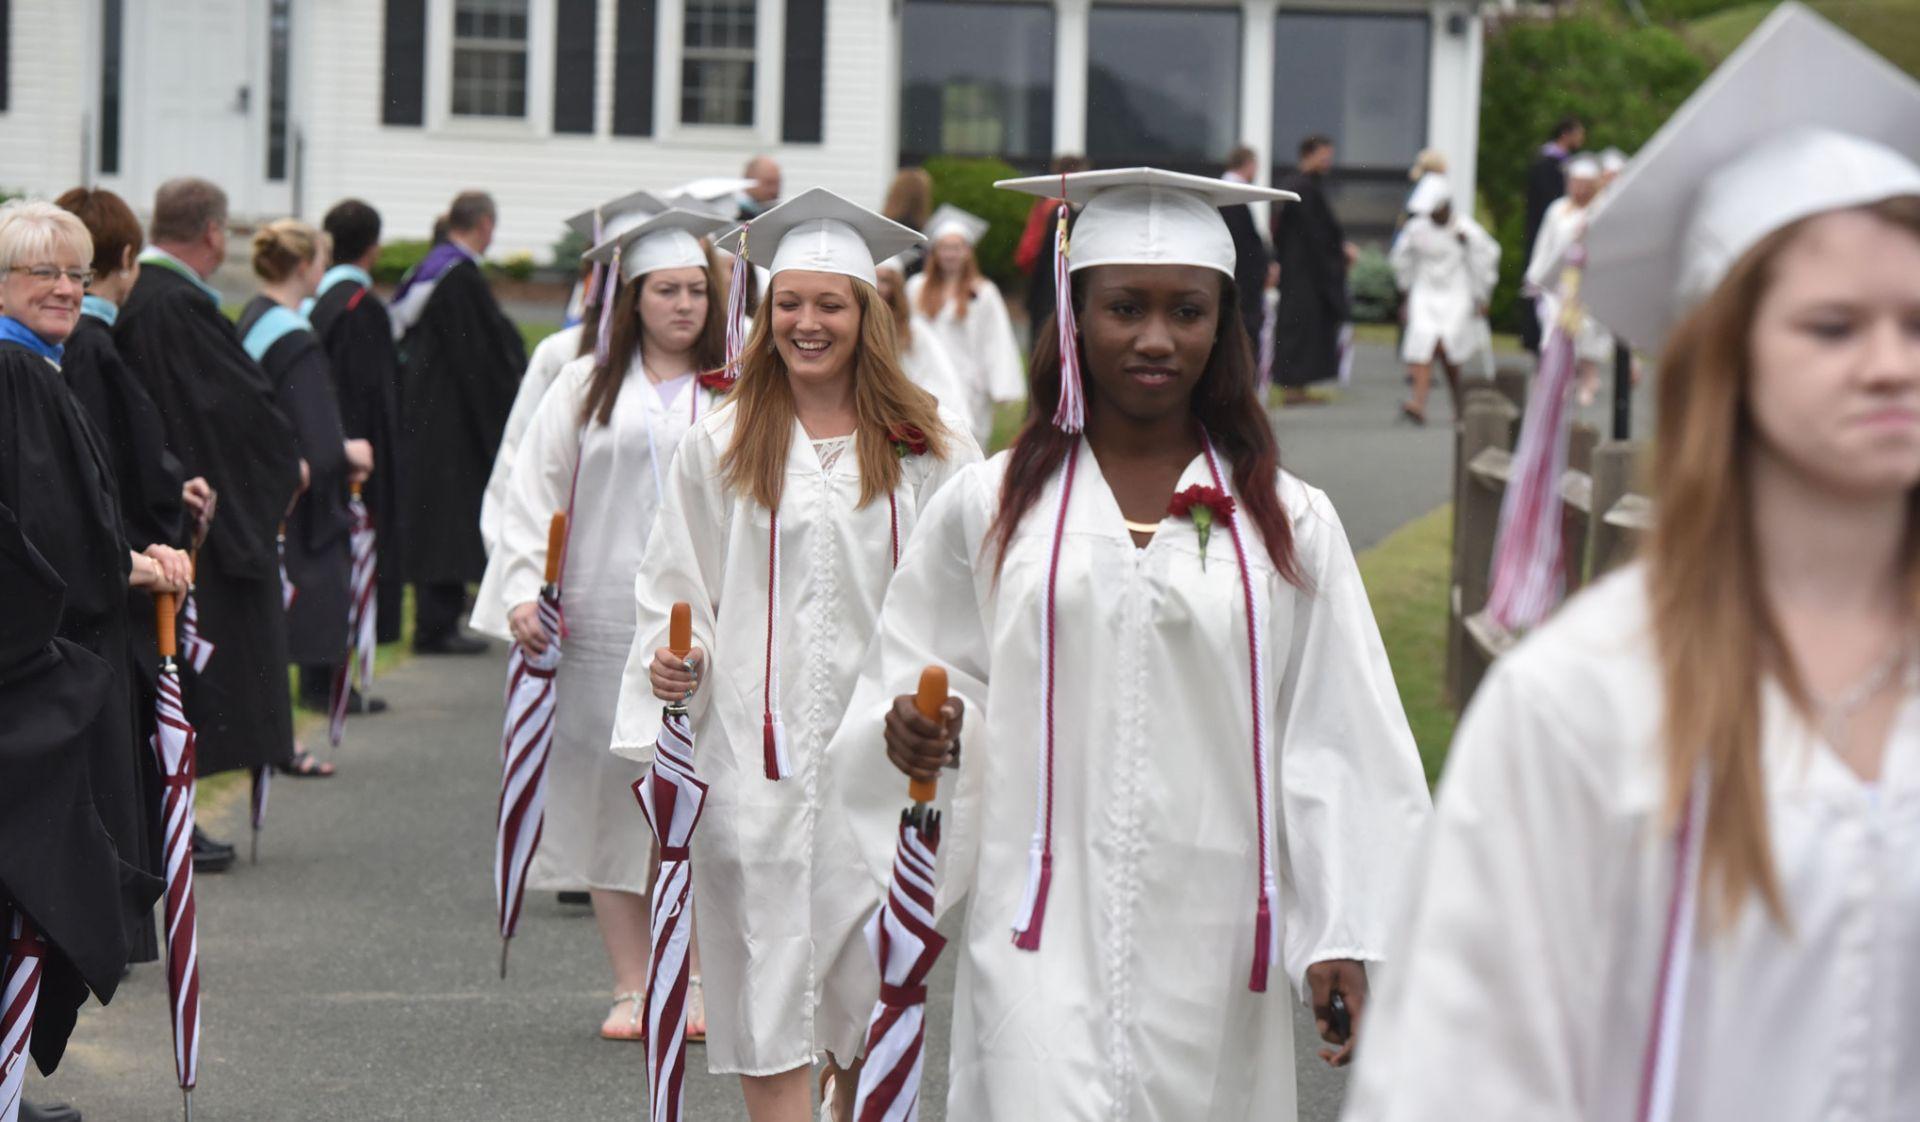 Students marching at graduation. 